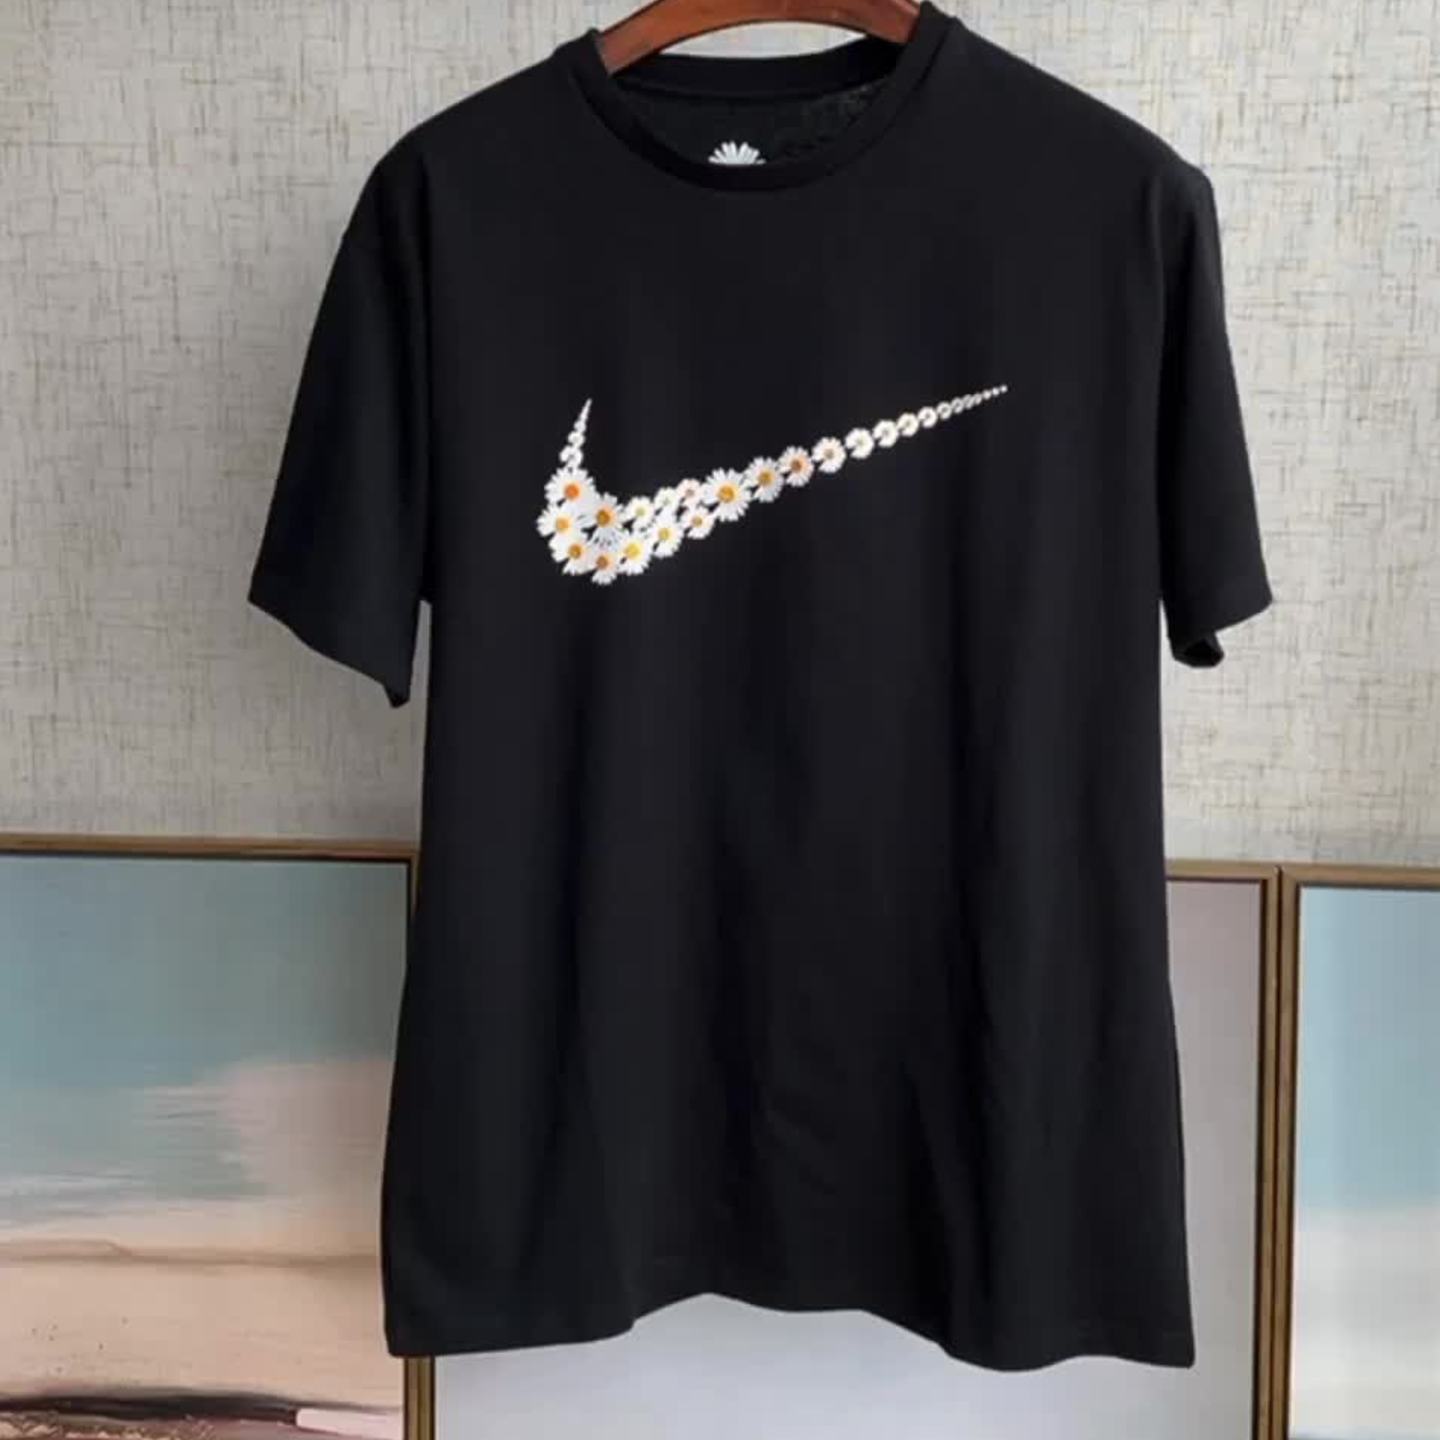 Nike peaceminus T shirt 